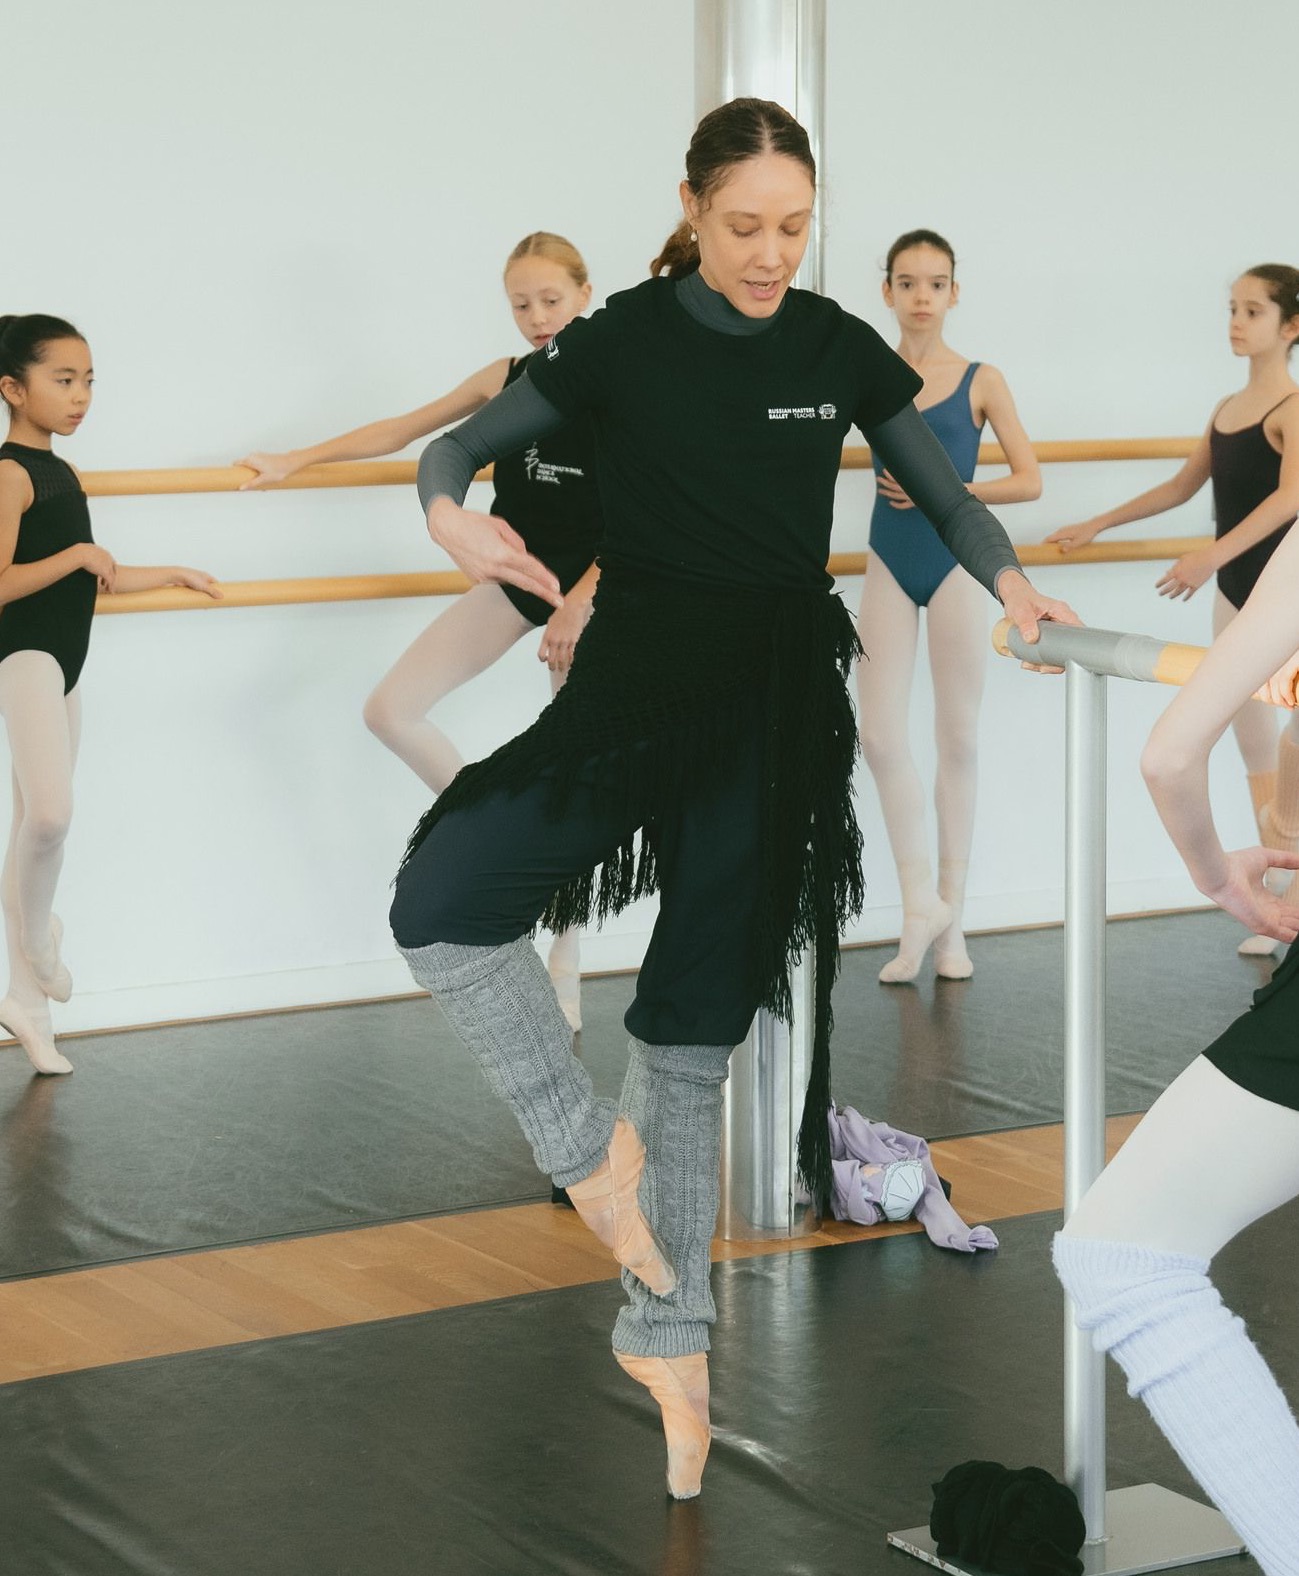 Yolanda Correa - Ballet Artist and guest of RMB intensives